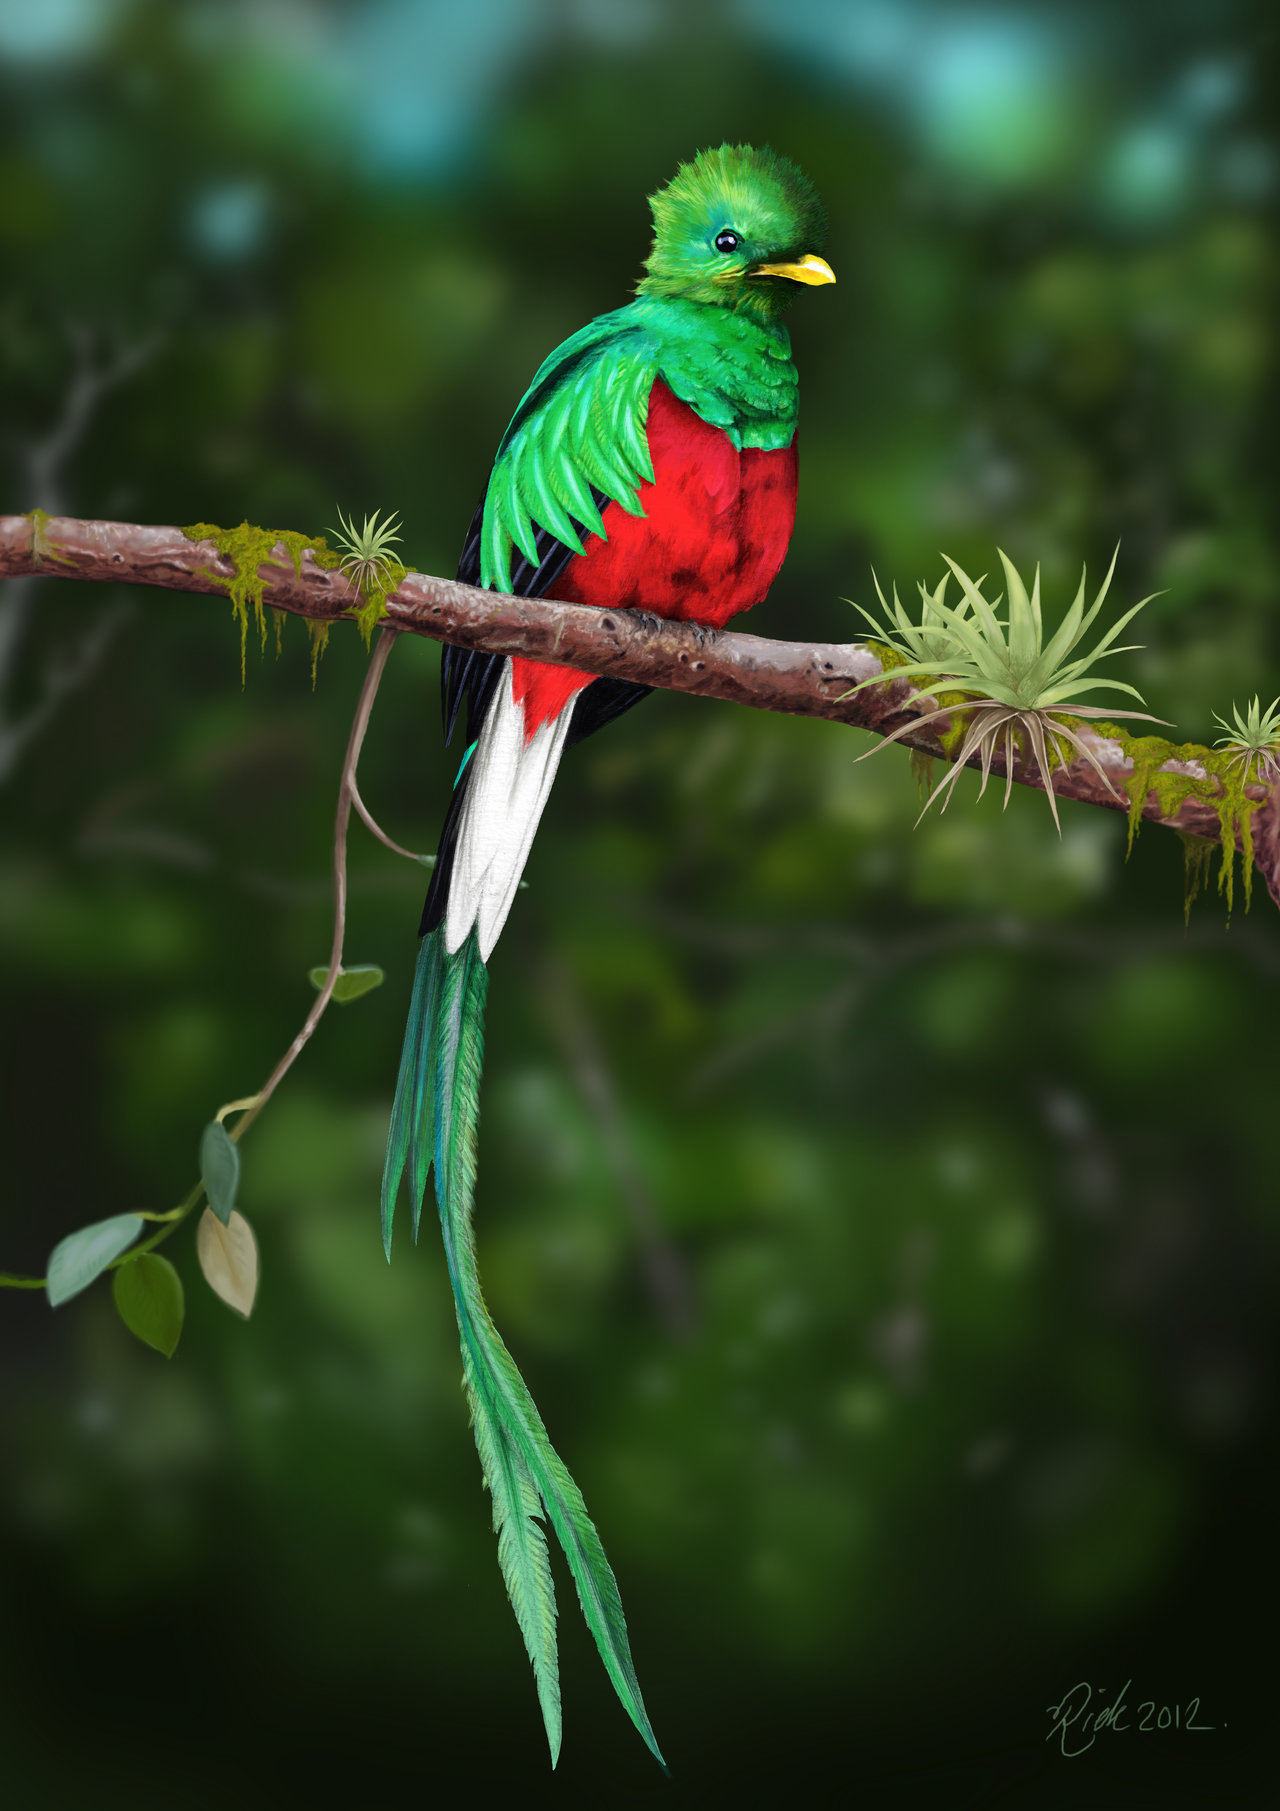 Pretty Resplendent quetzal